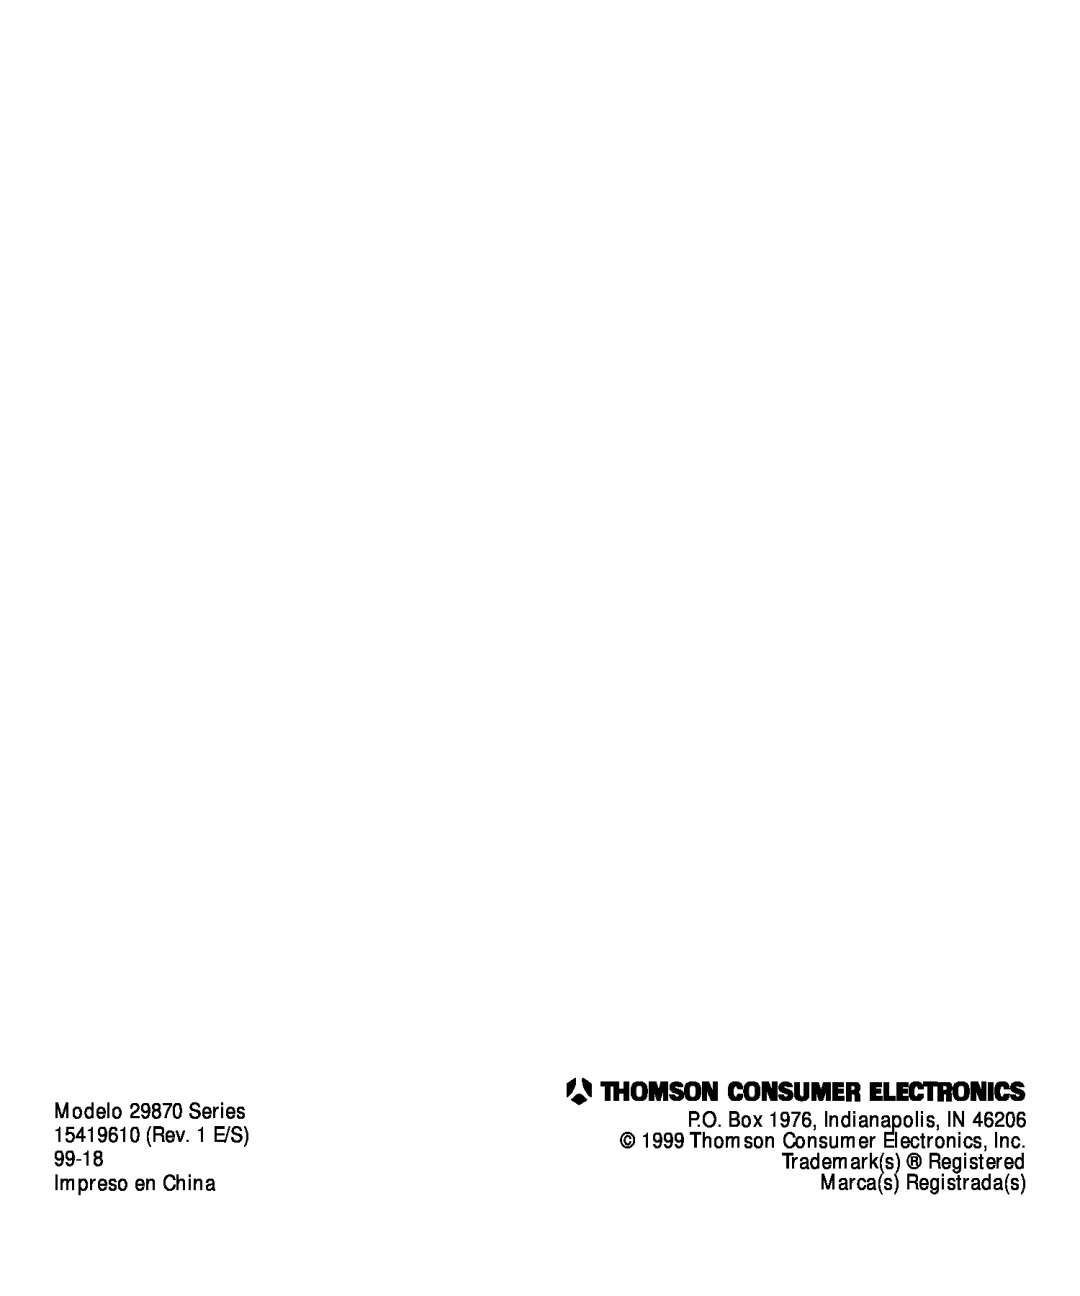 GE manual Modelo 29870 Series, P.O. Box 1976, Indianapolis, IN, 15419610 Rev. 1 E/S, 99-18, Trademarks Registered 